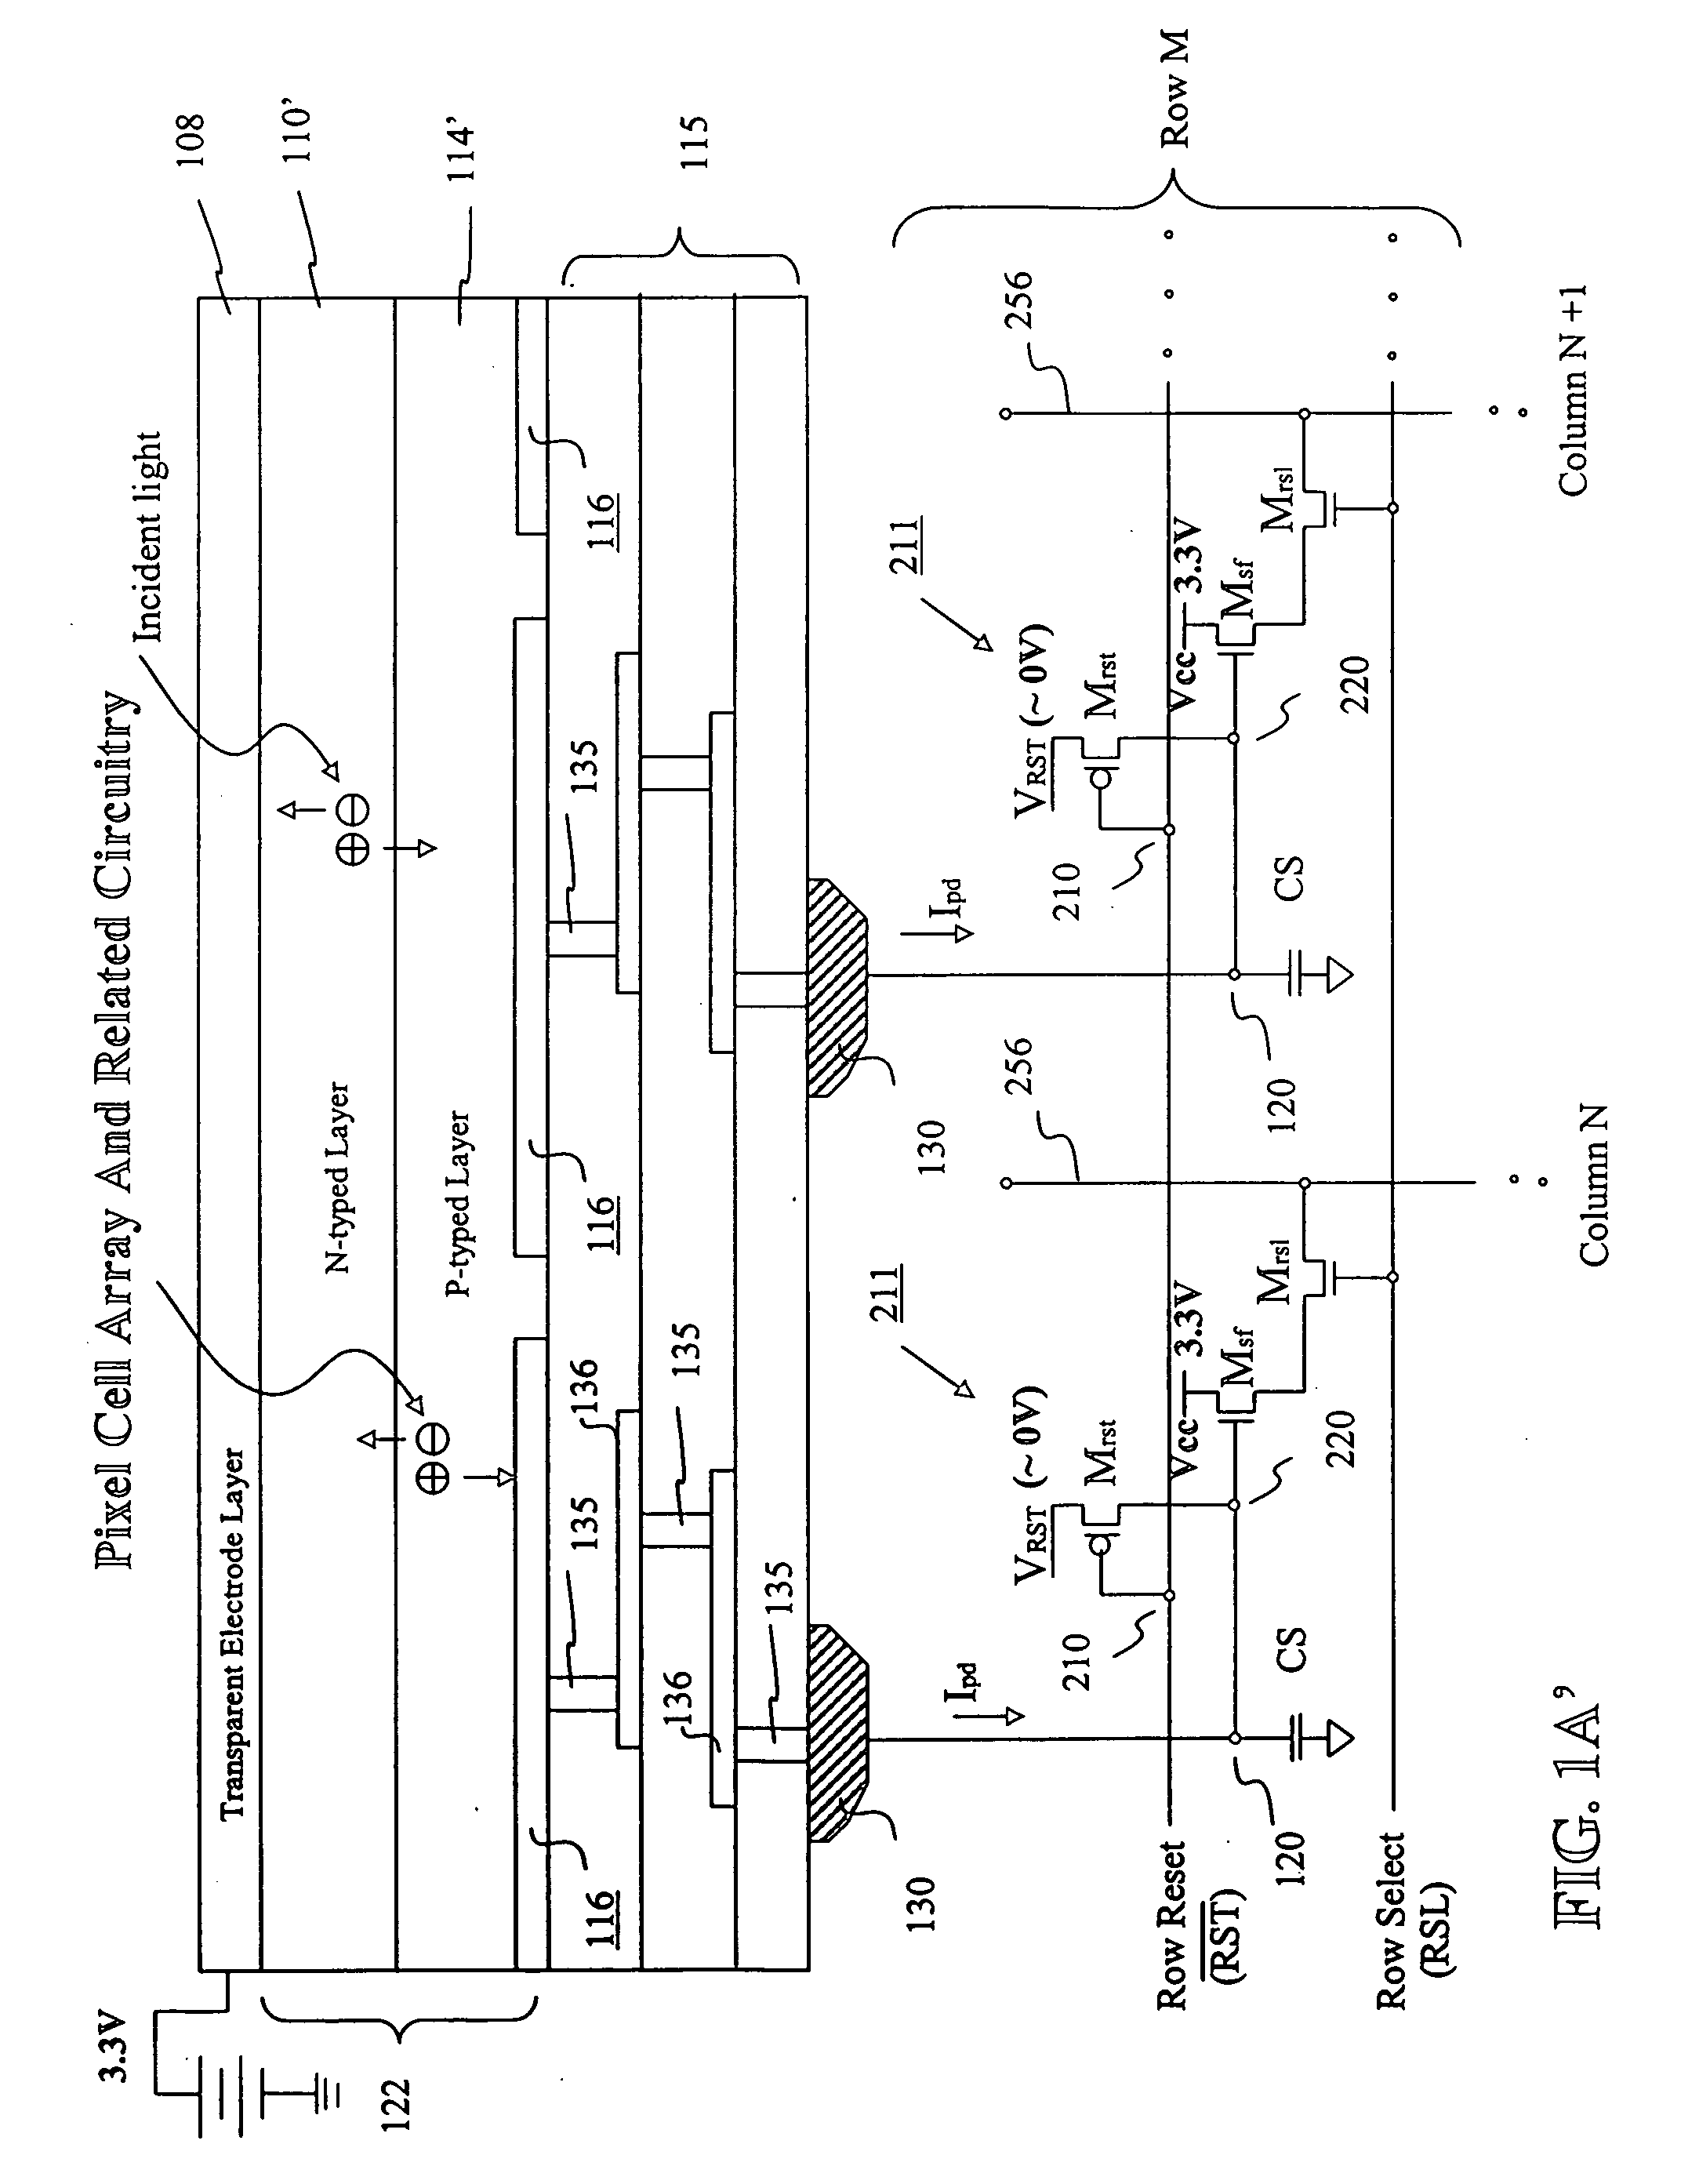 Image sensor with microcrystalline germanium photodiode layer